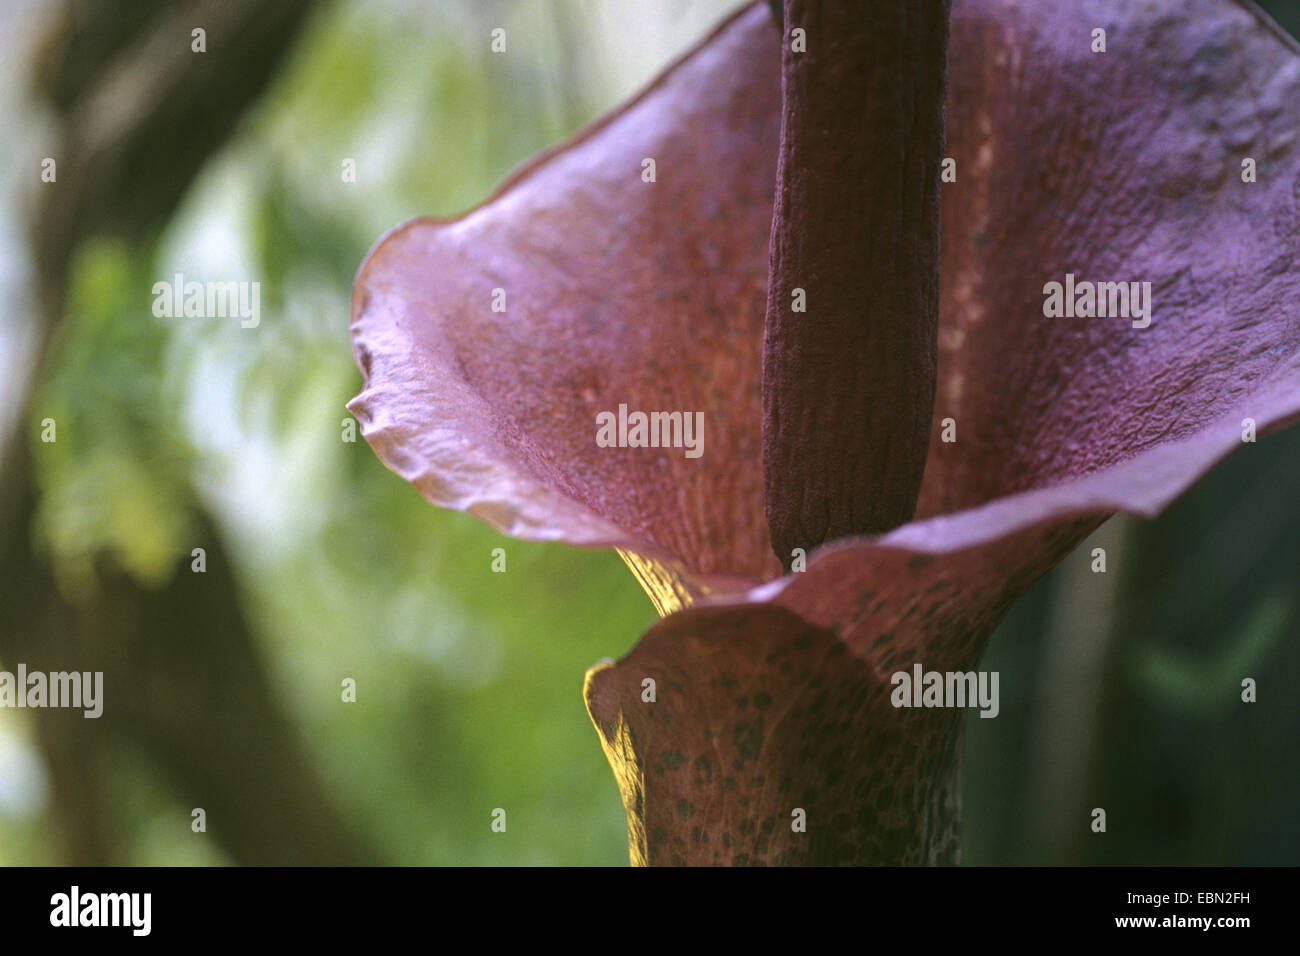 flamingo plant (Amorphophallus konjac, Amorphophallus rivieri), detail of inflorescence Stock Photo